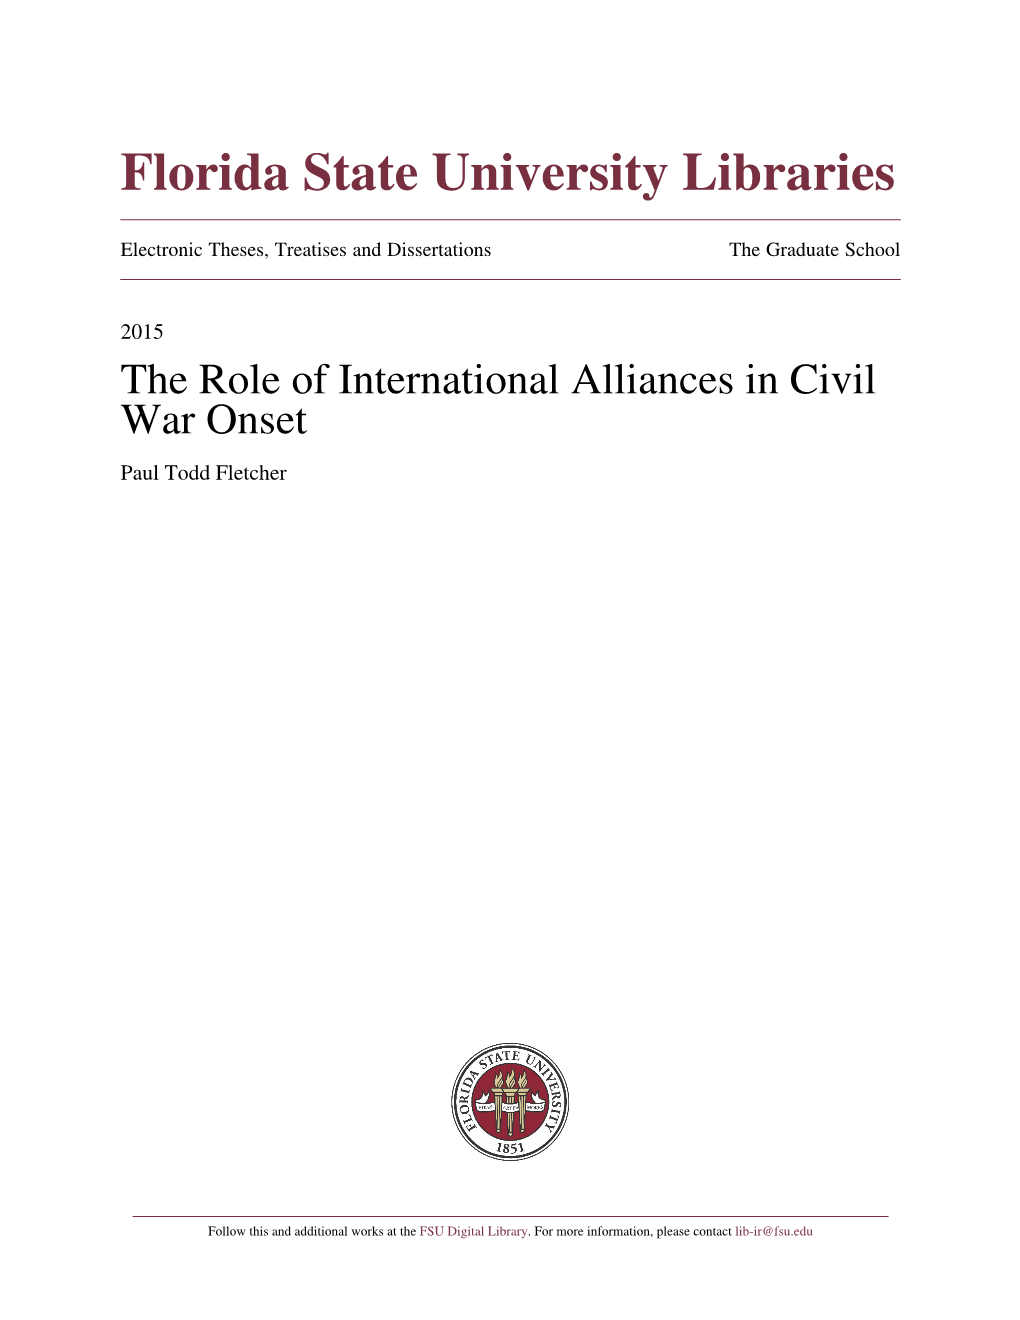 The Role of International Alliances in Civil War Onset Paul Todd Fletcher